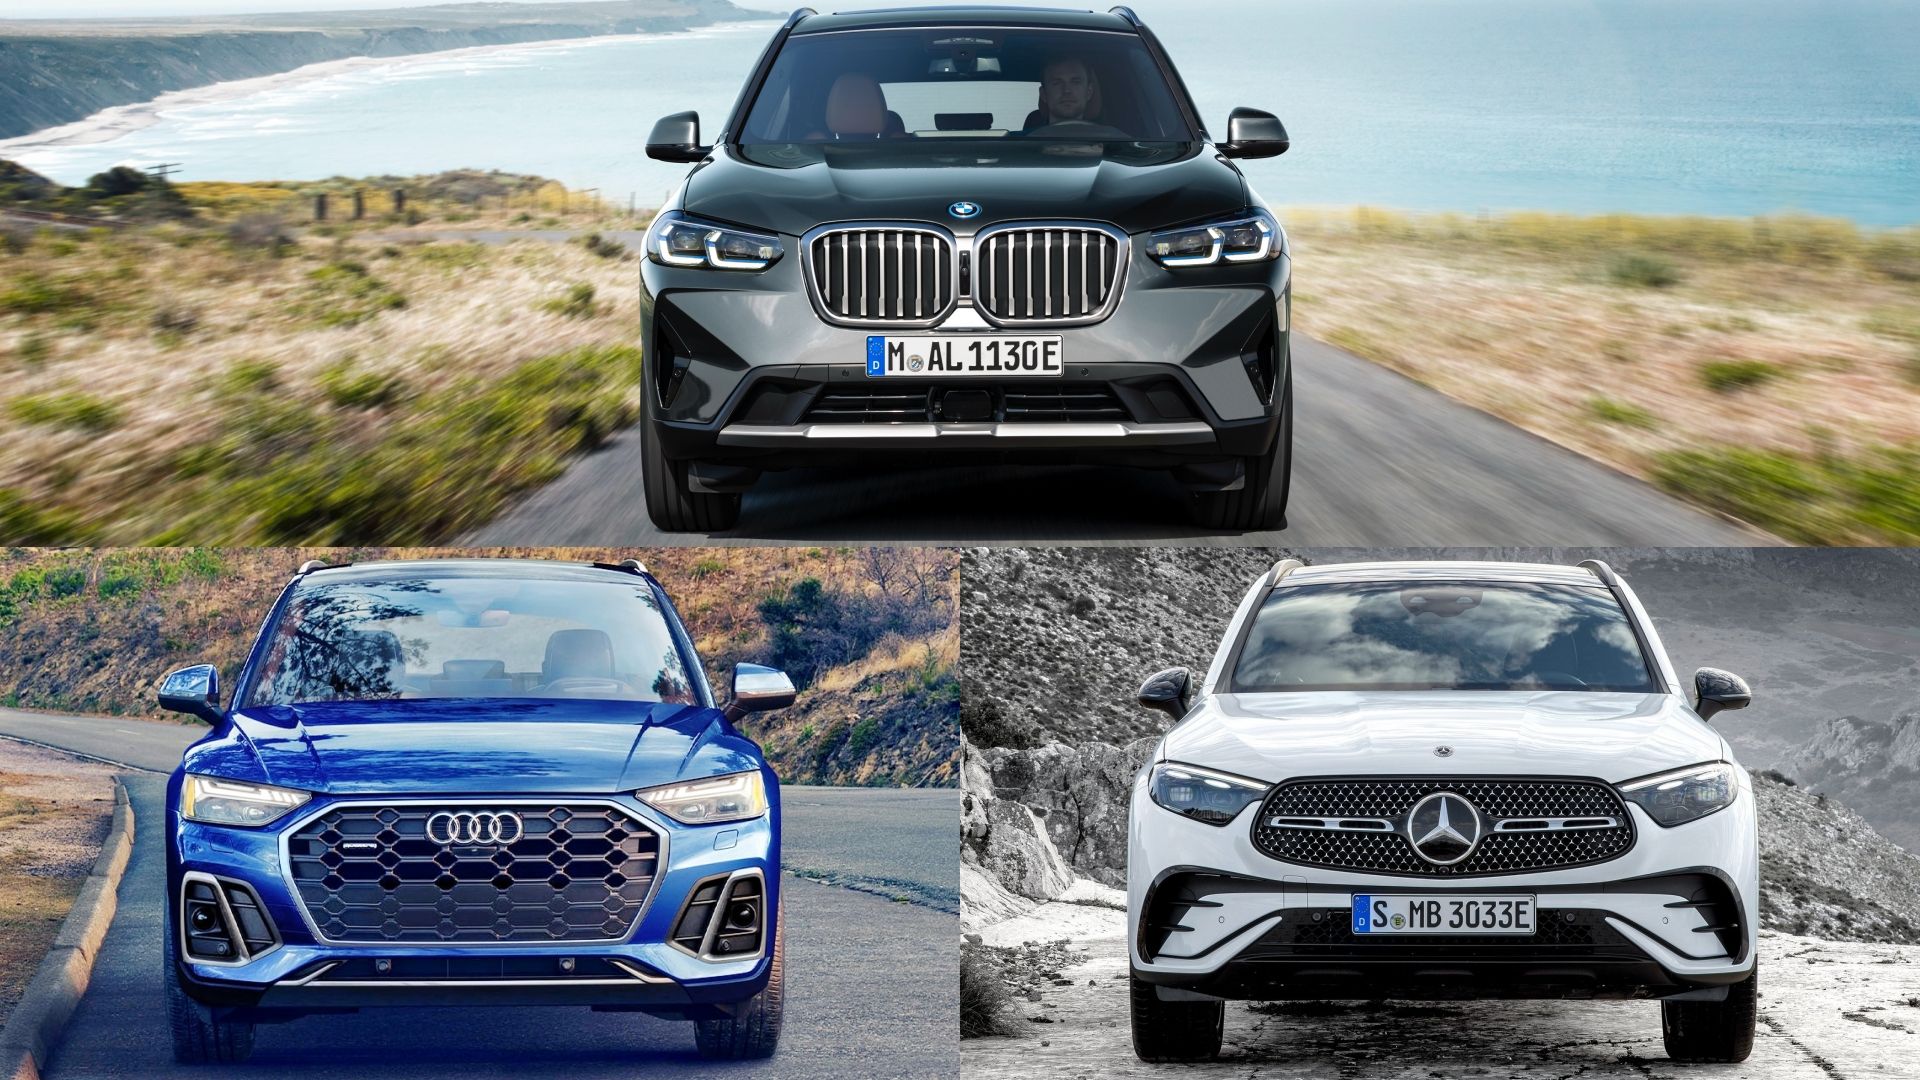 BMW X3 vs Audi Q5  Size, Horsepower, and Fuel Economy